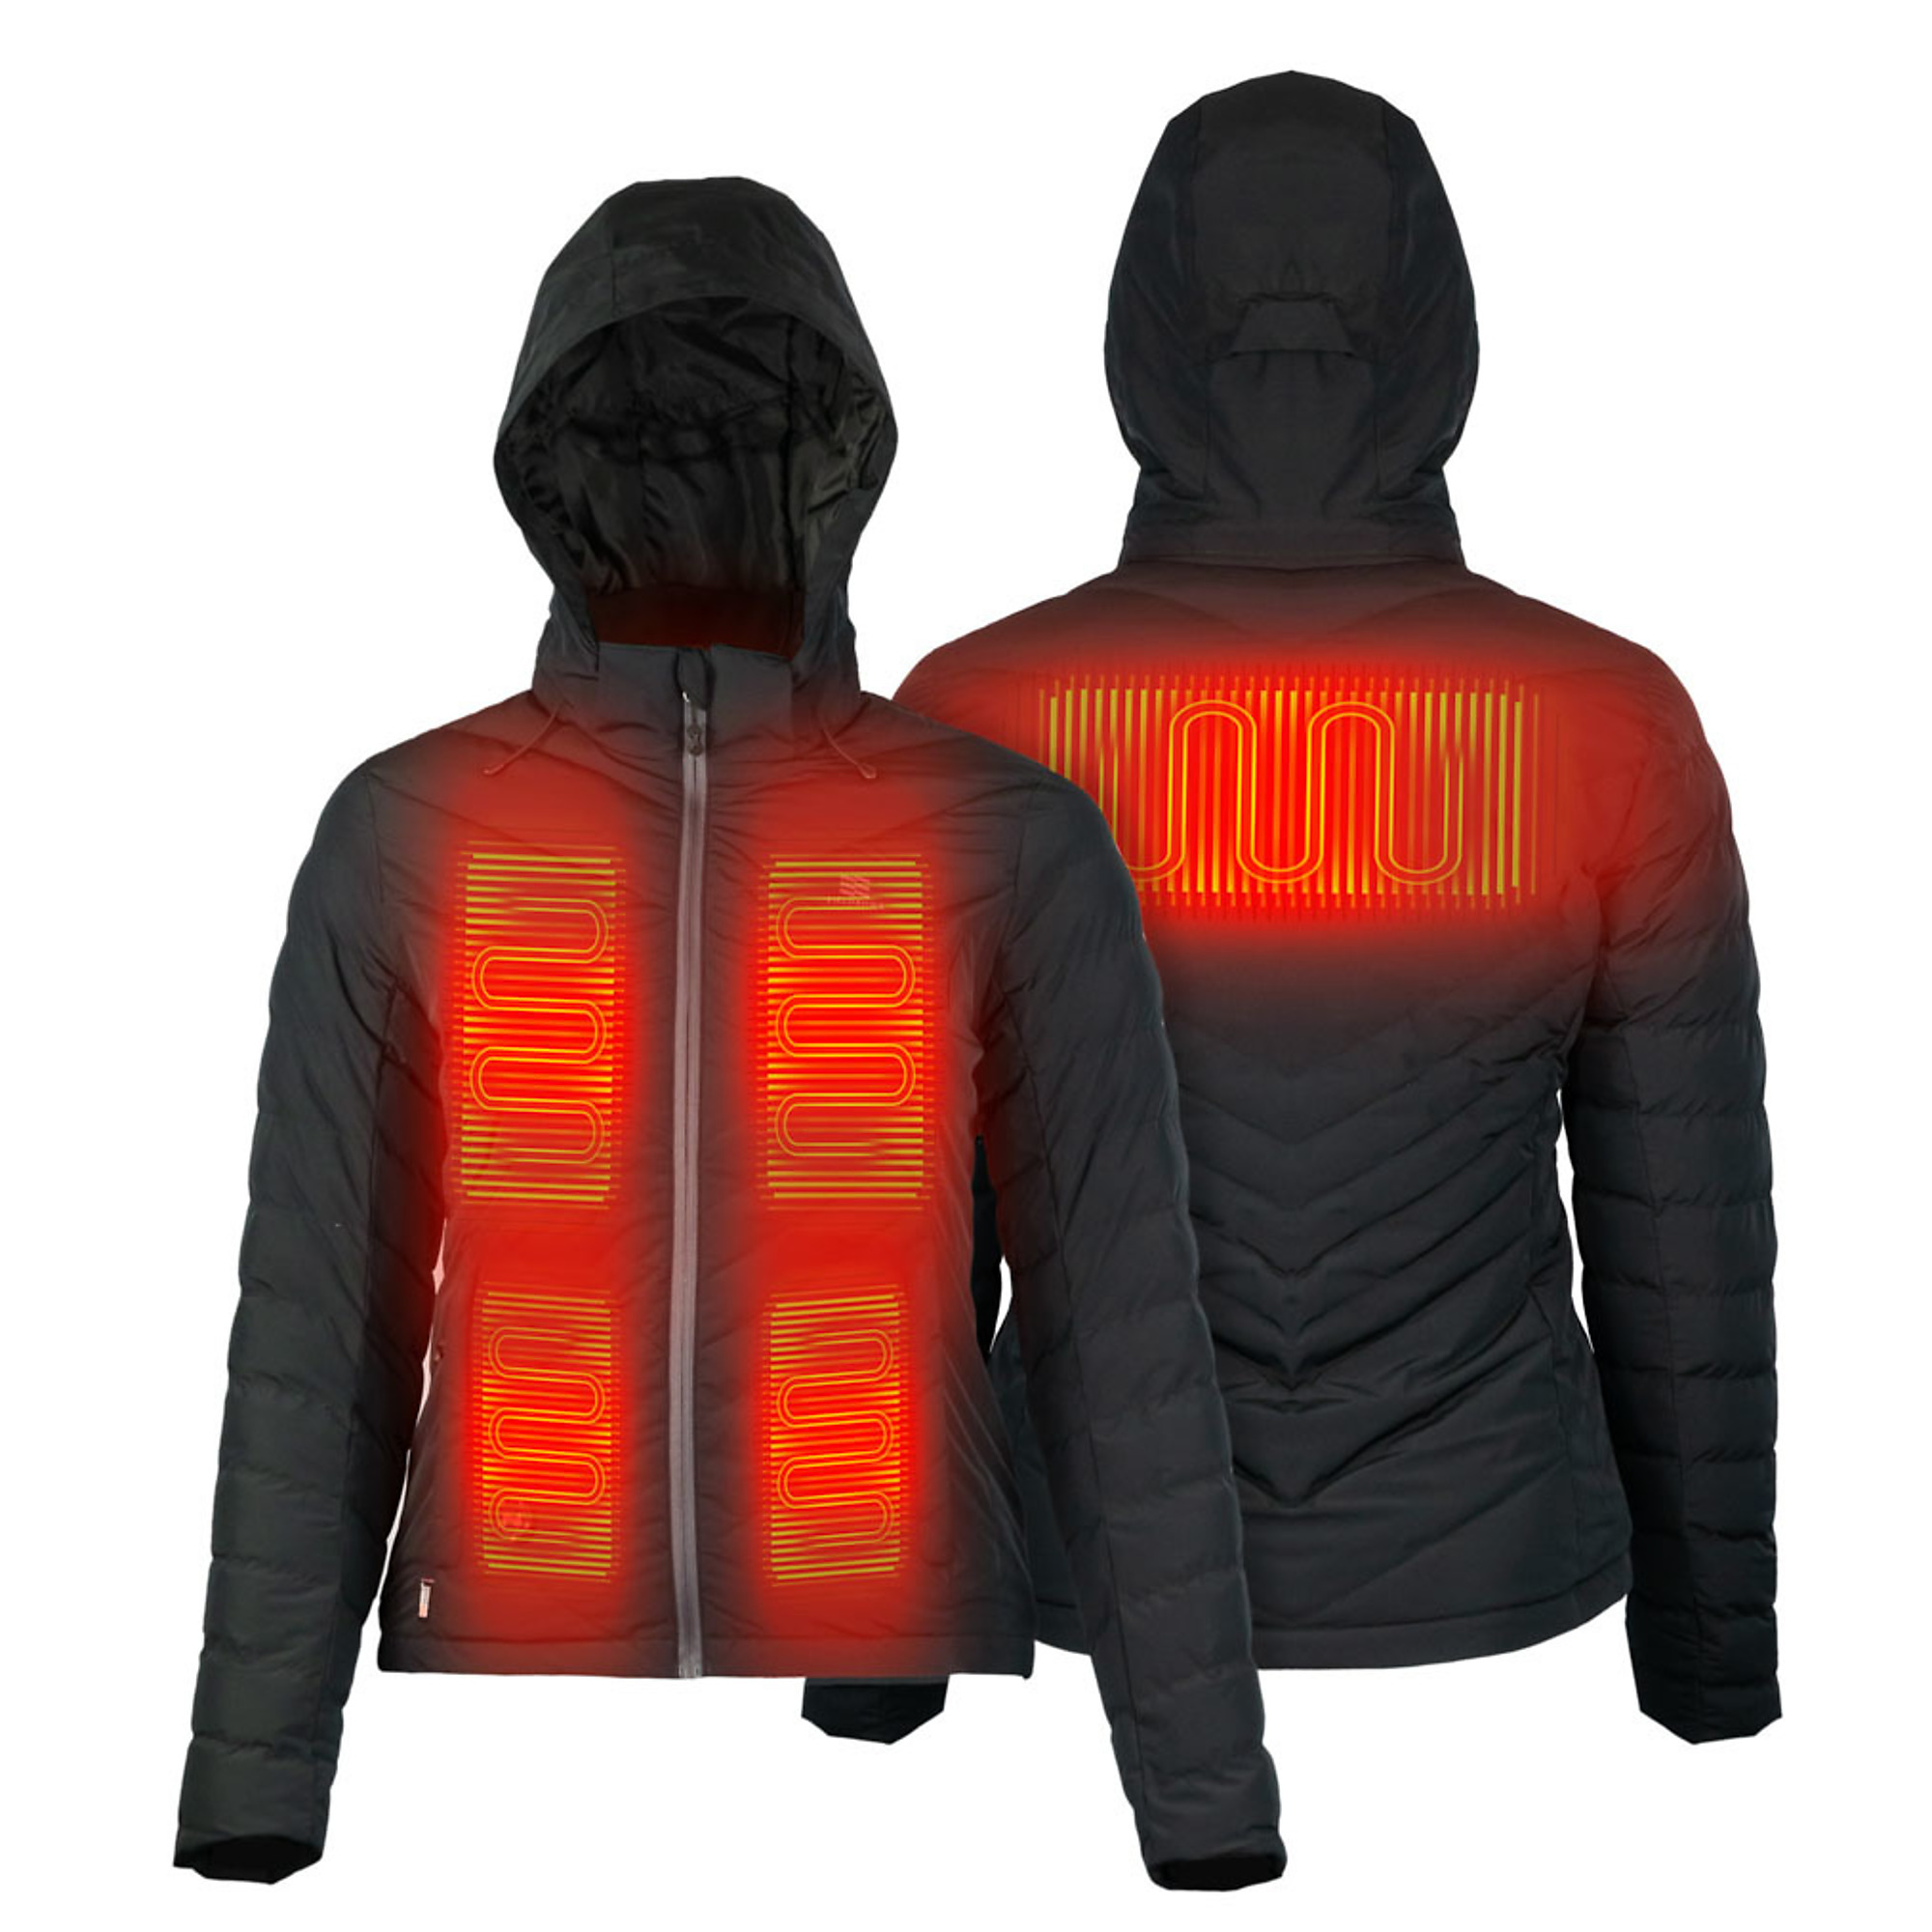 Fieldsheer, Women's Crest Heated Jacket with 7.4v Battery, Size S, Color Black, Model MWWJ39010222